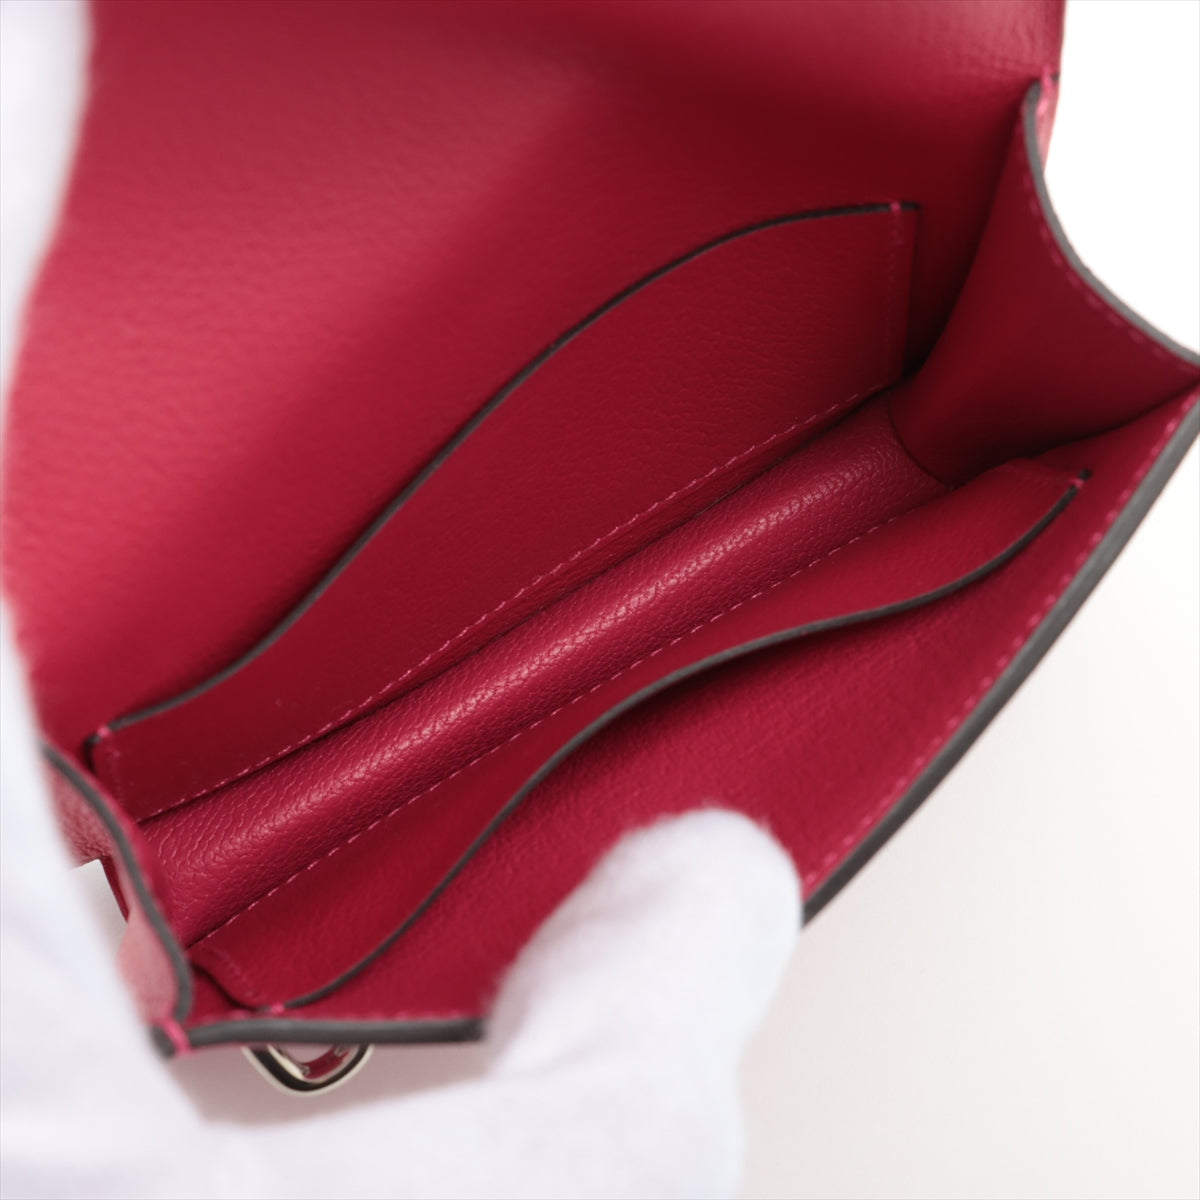 Hermès Louris Slim Ever color Wallet Rose mexico Silver Metal fittings Z: 2021